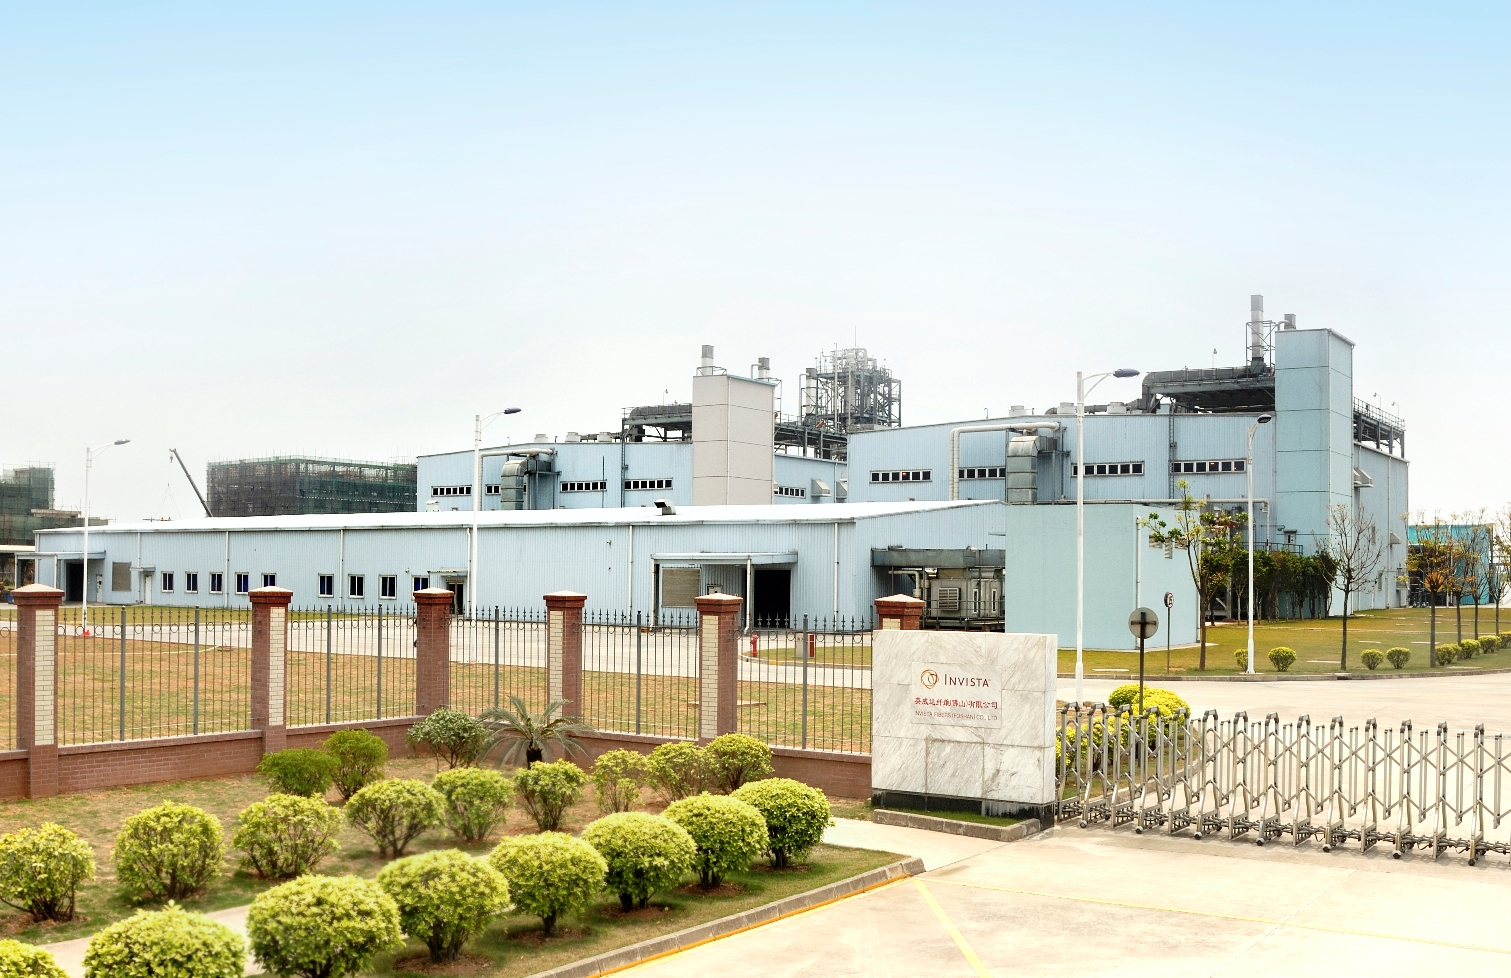 Invista's newly expanded spandex production facility in Foshan, China